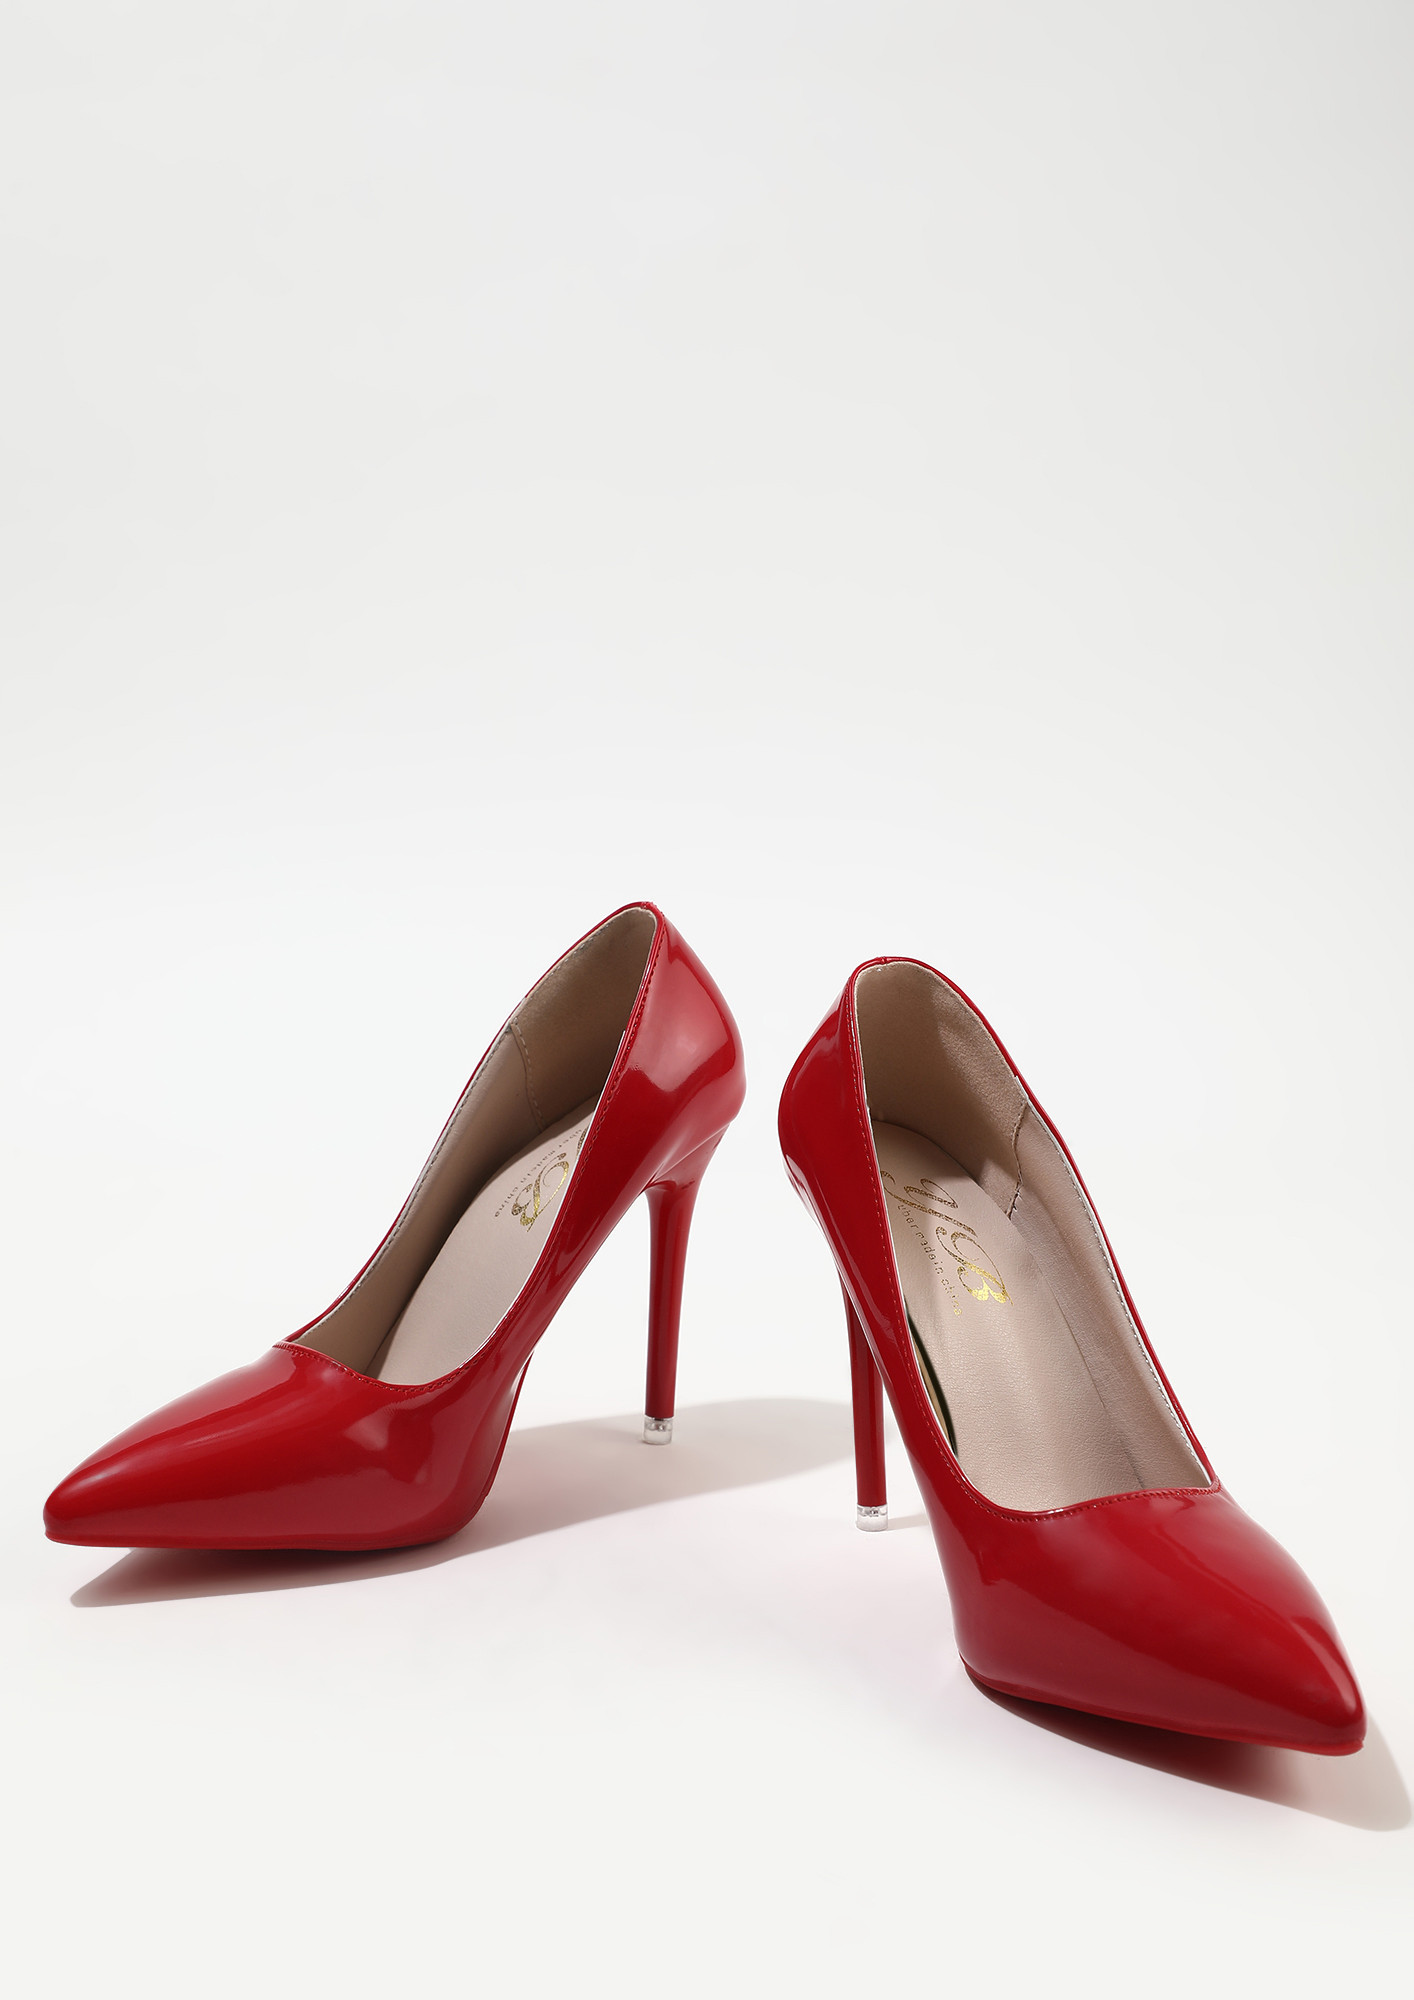 Klaur Melbourne Women Red Heels - Buy Red Color Klaur Melbourne Women Red  Heels Online at Best Price - Shop Online for Footwears in India |  Flipkart.com